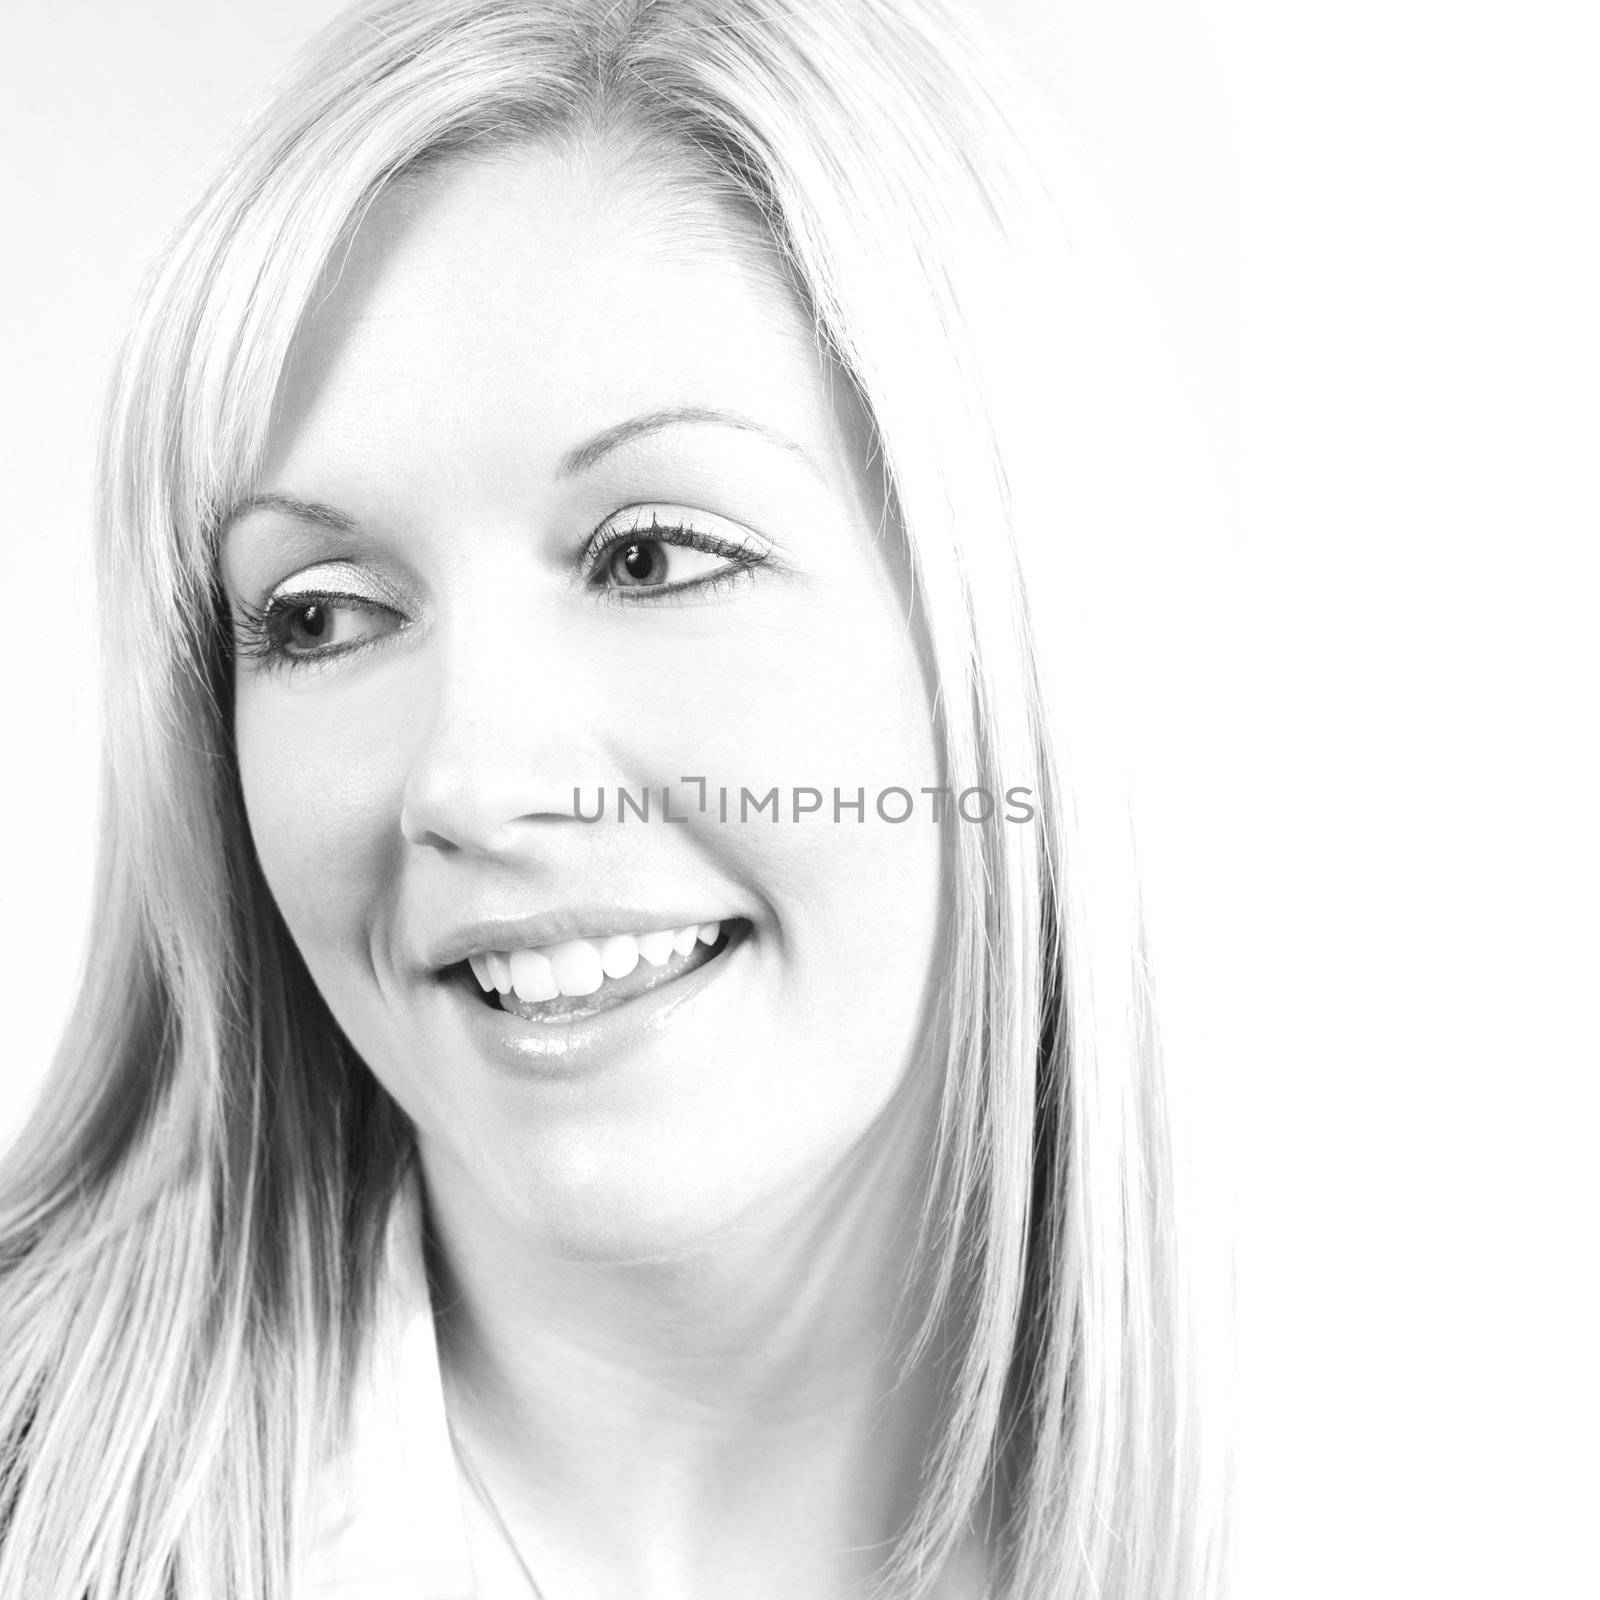 Highkey image of a beautiful blonde female smiling.
